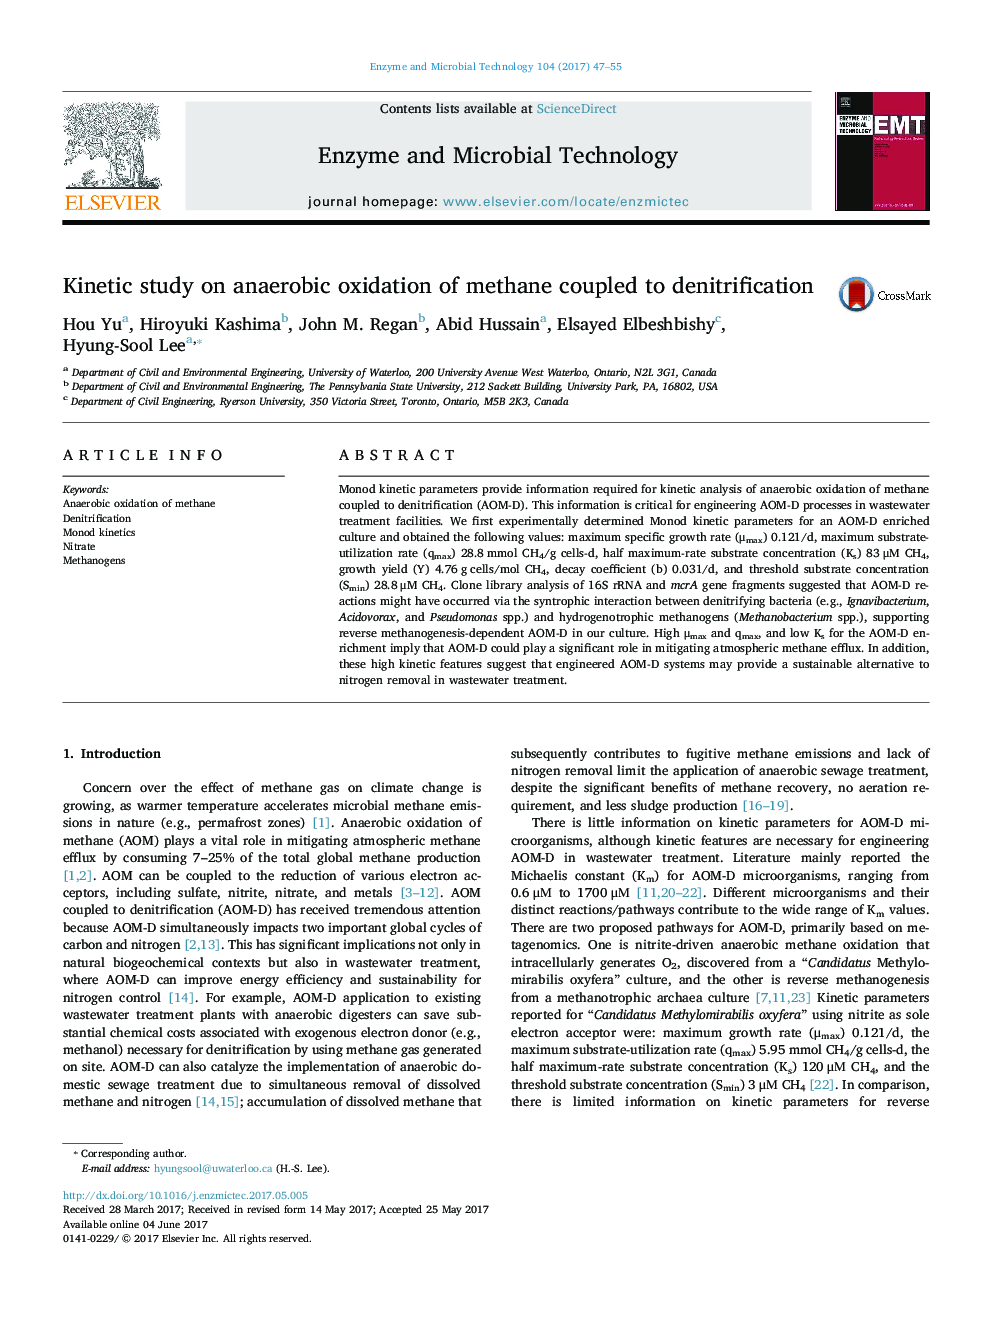 Kinetic study on anaerobic oxidation of methane coupled to denitrification